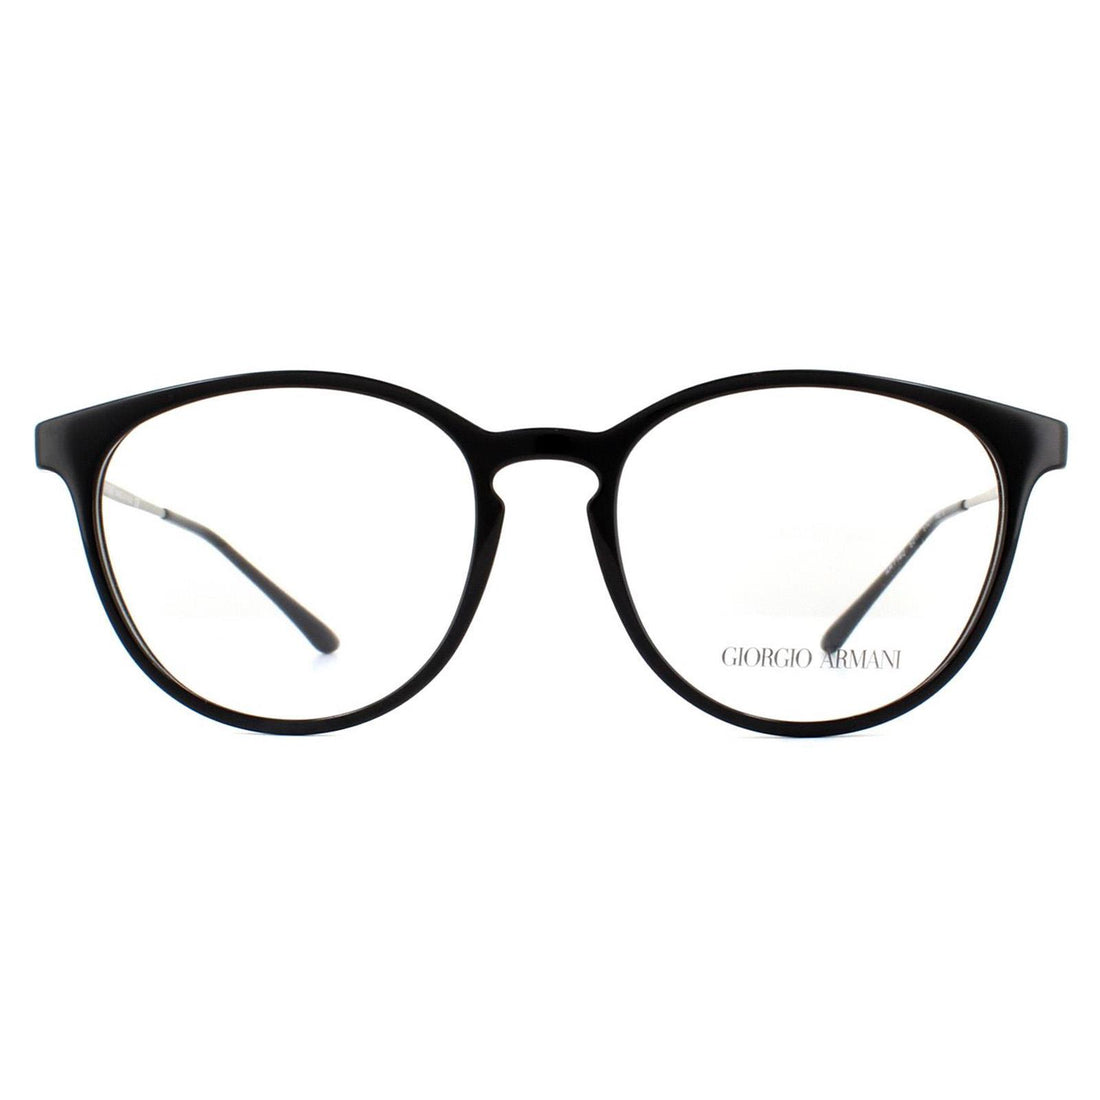 Giorgio Armani AR7140 Glasses Frames Black